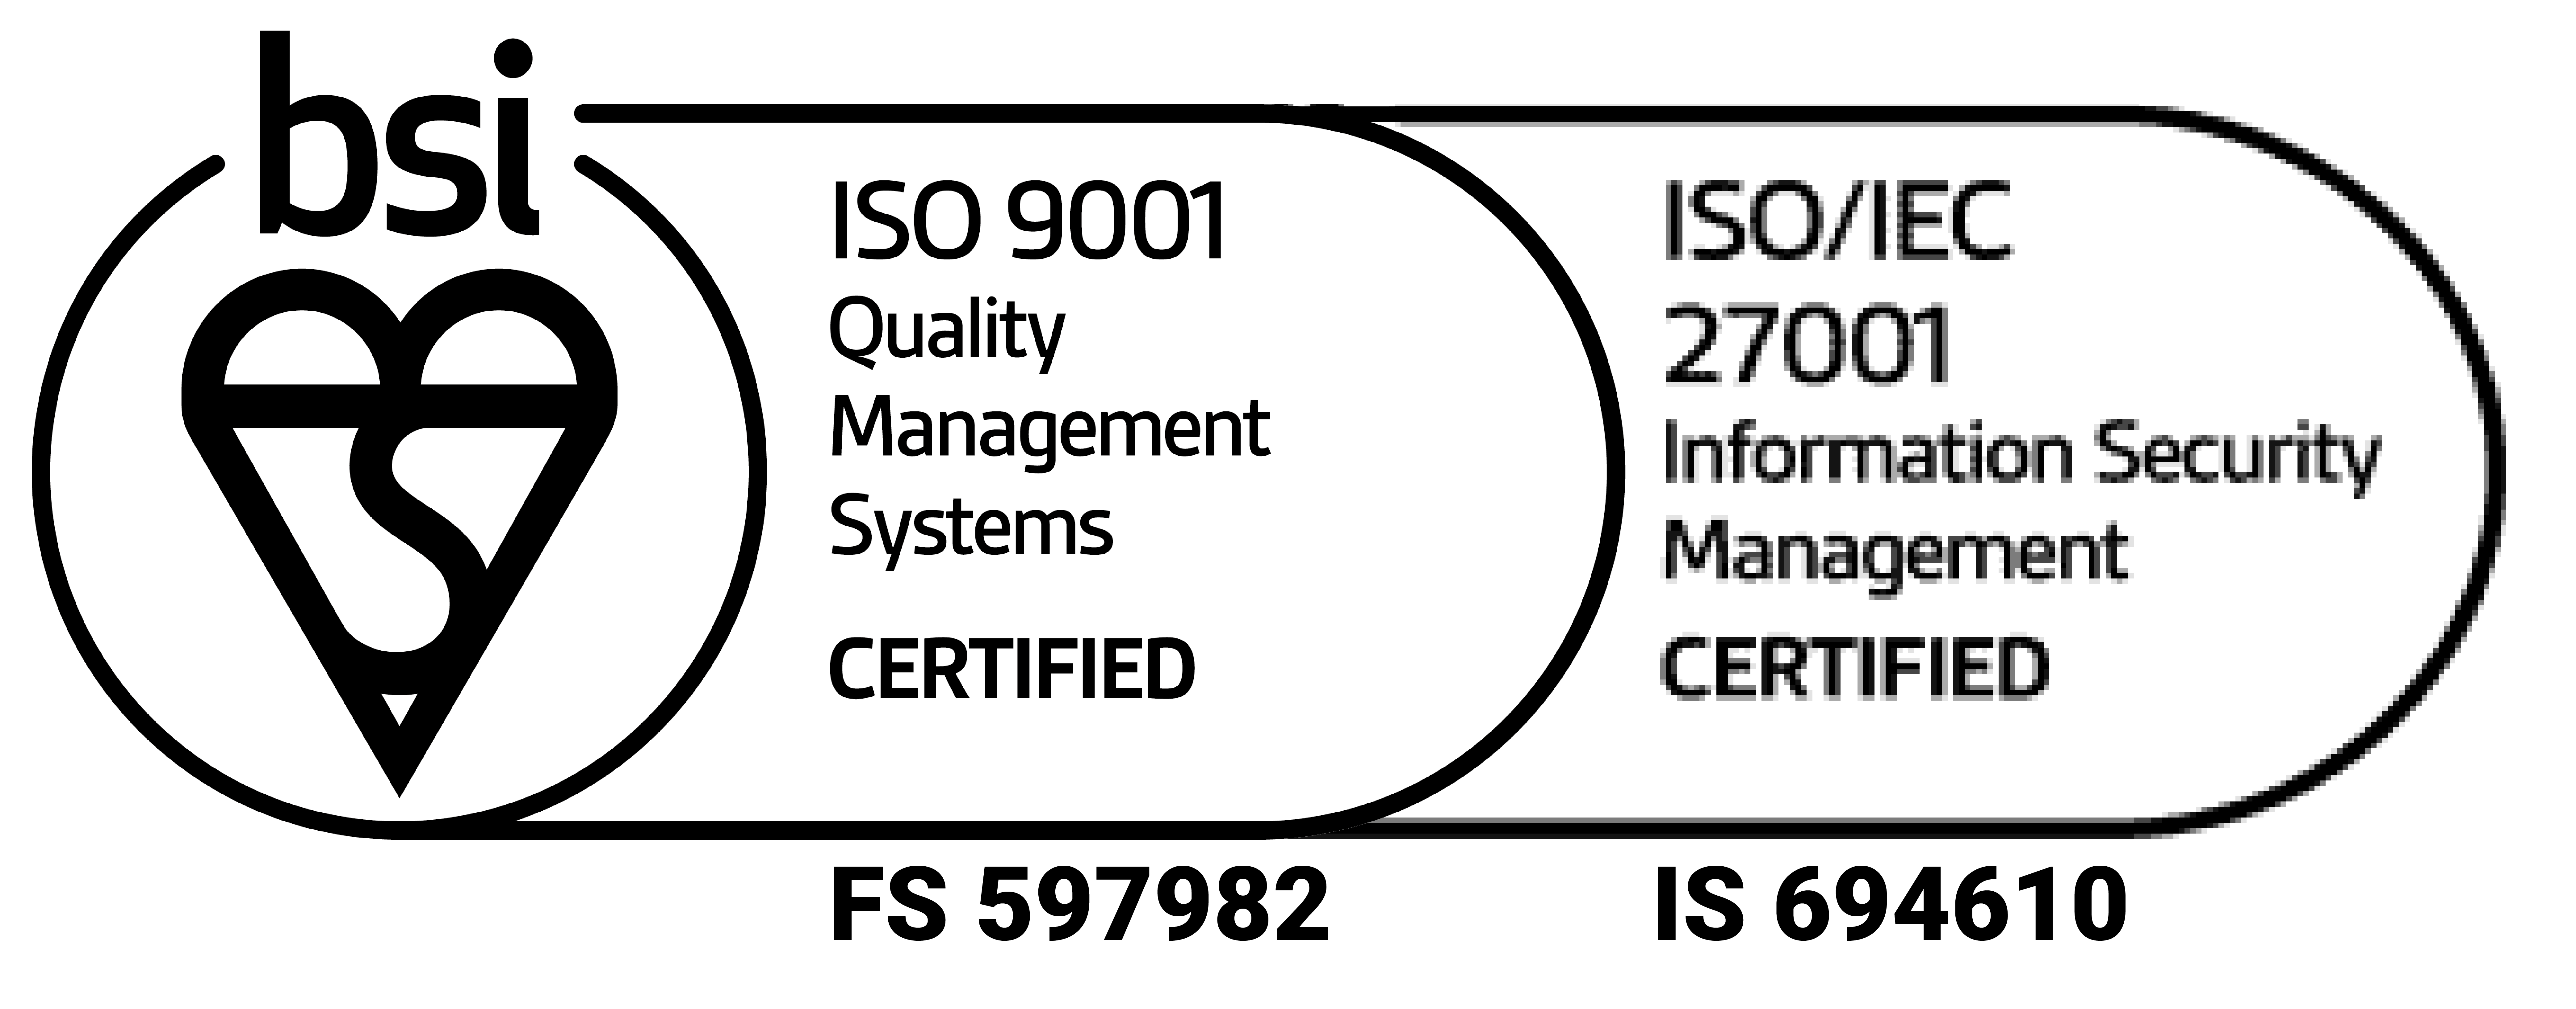 Home Telecom ISO certification